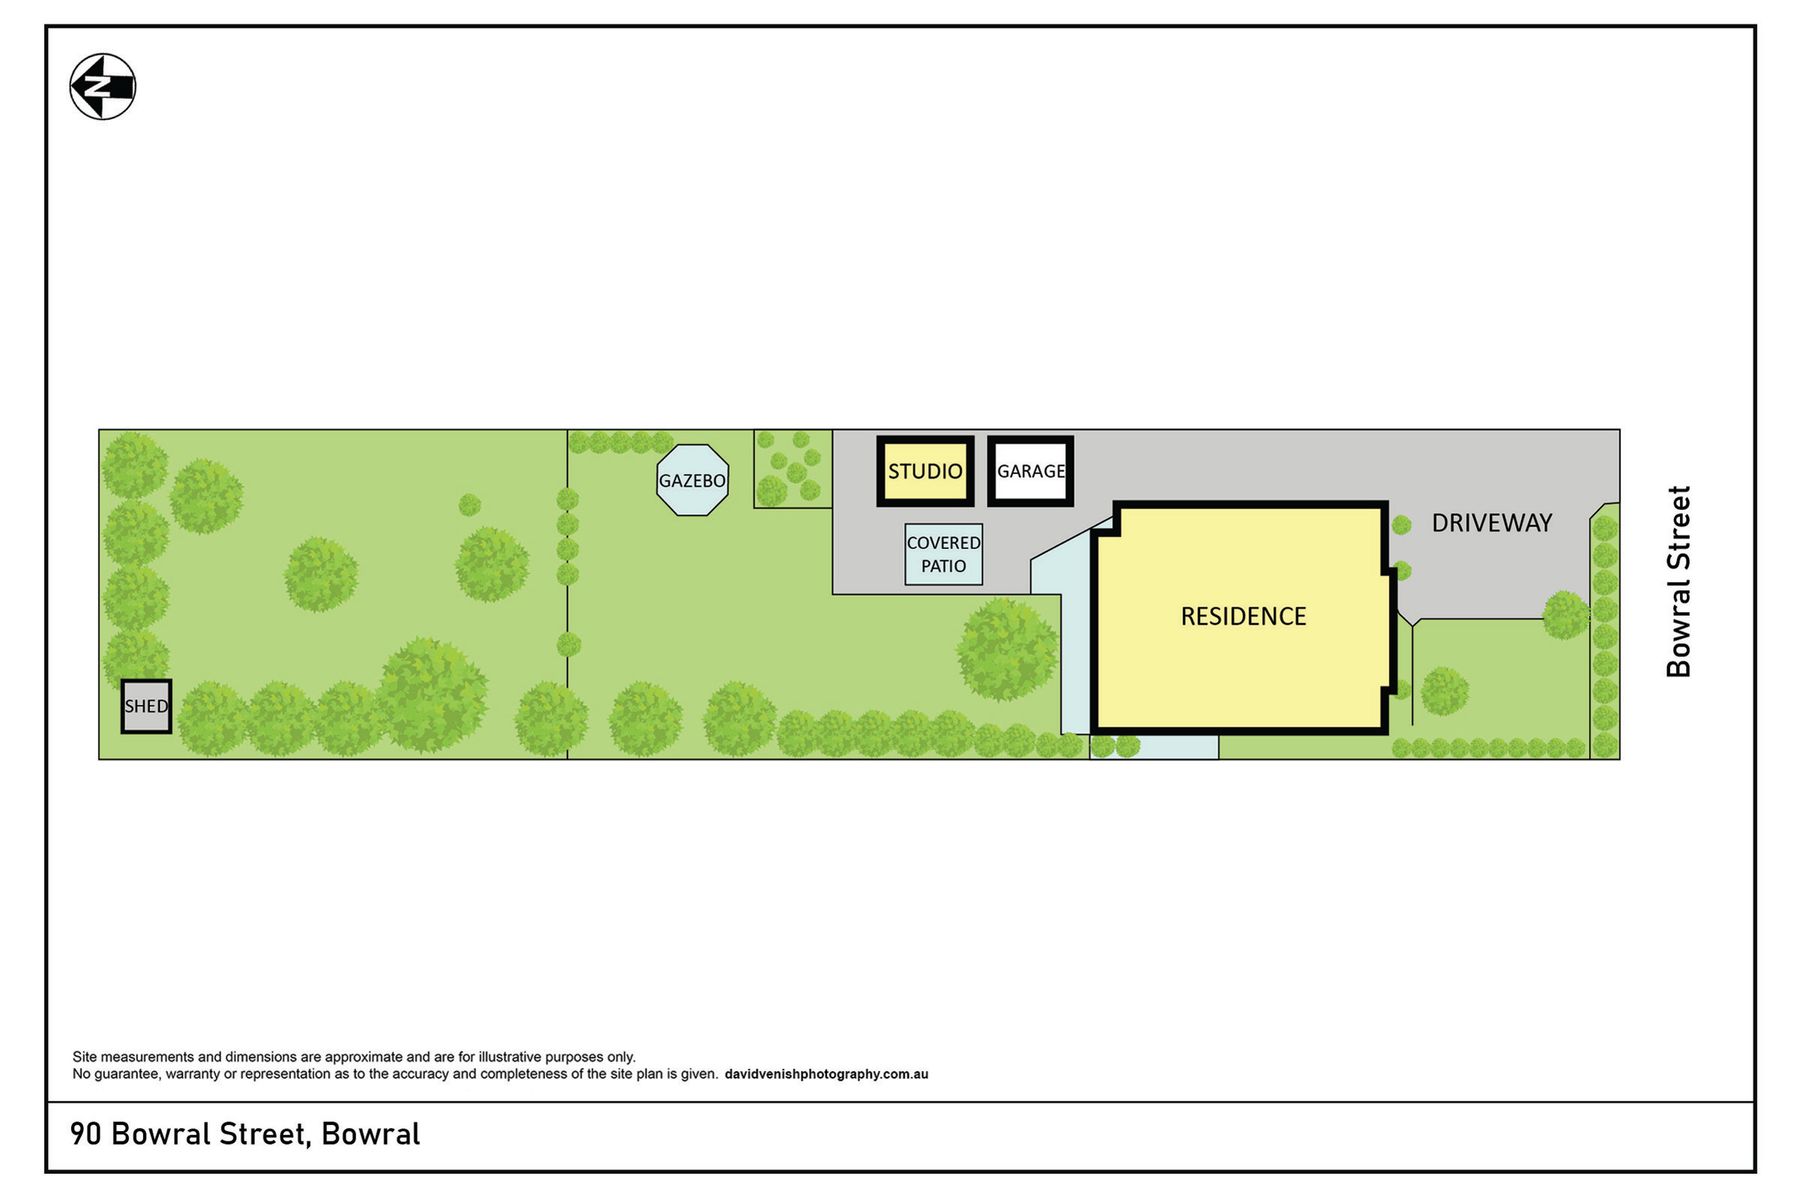 2 90 Bowral Street, Bowral   Site Plan